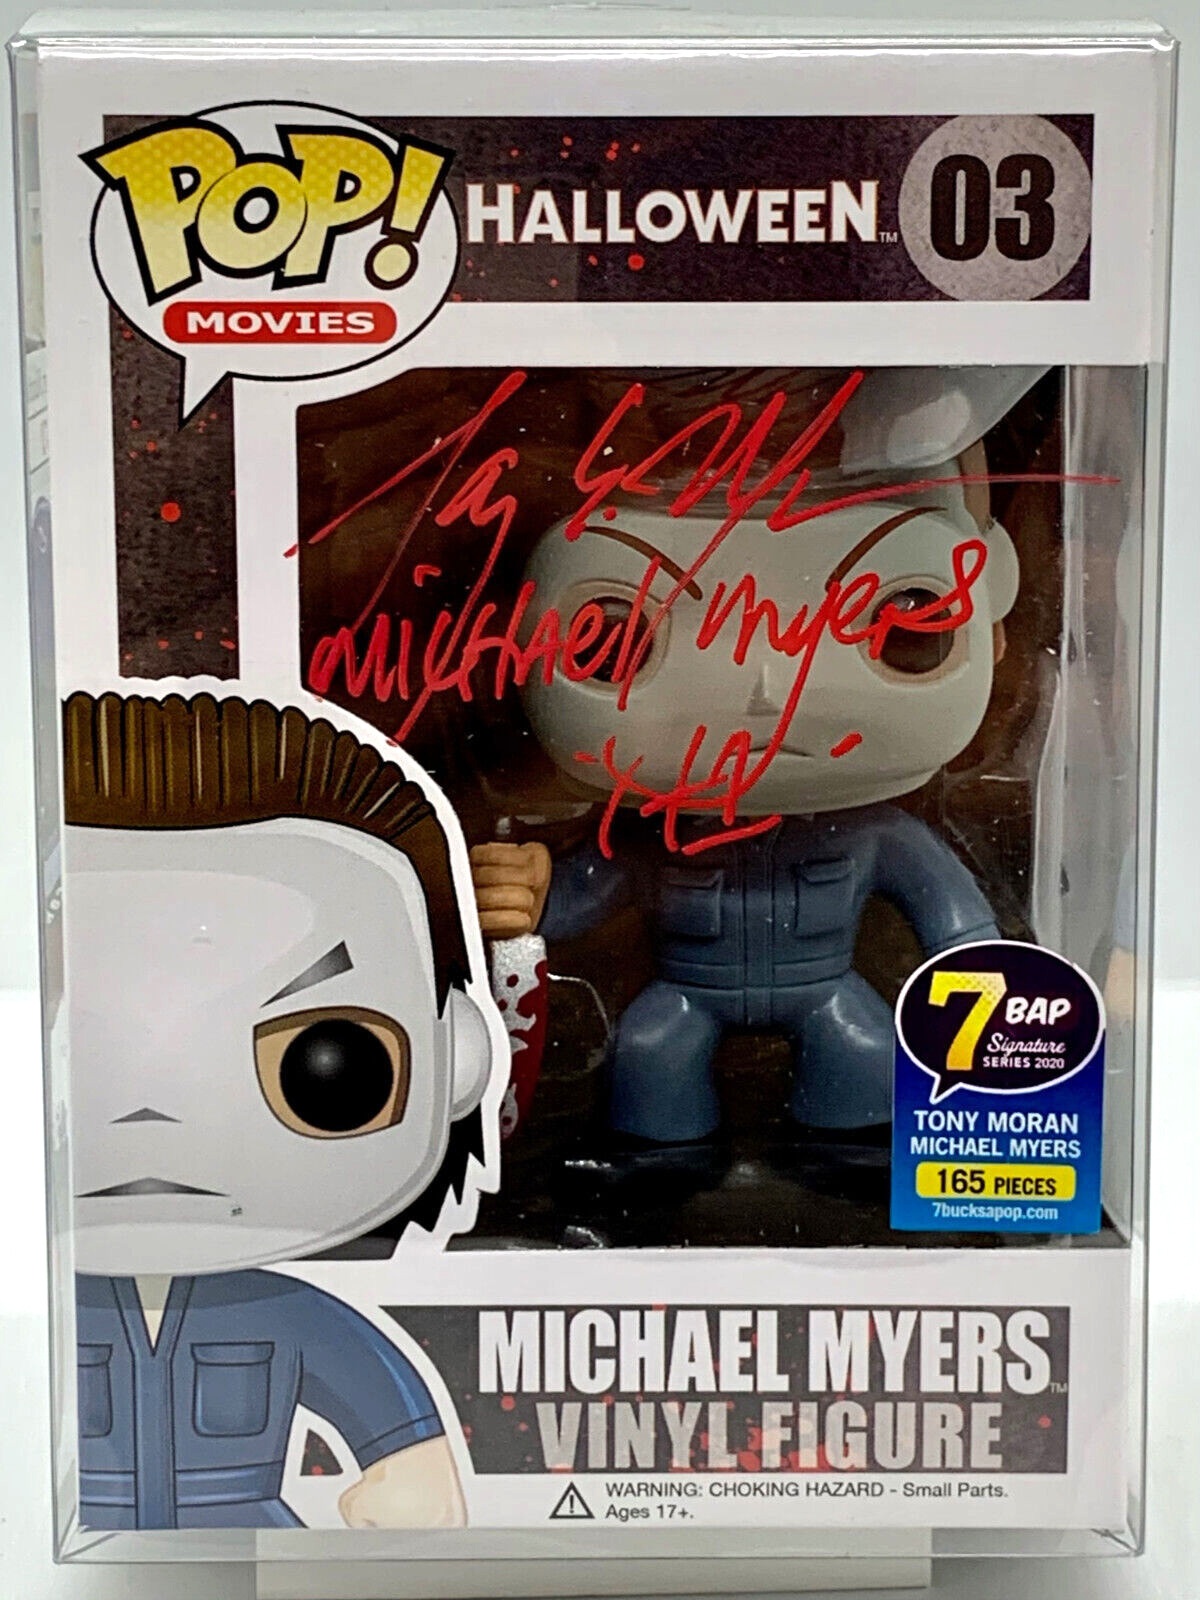 Michael Myers Pop #03 Halloween Funko 2013 Signed Tony Moran Certified Limited